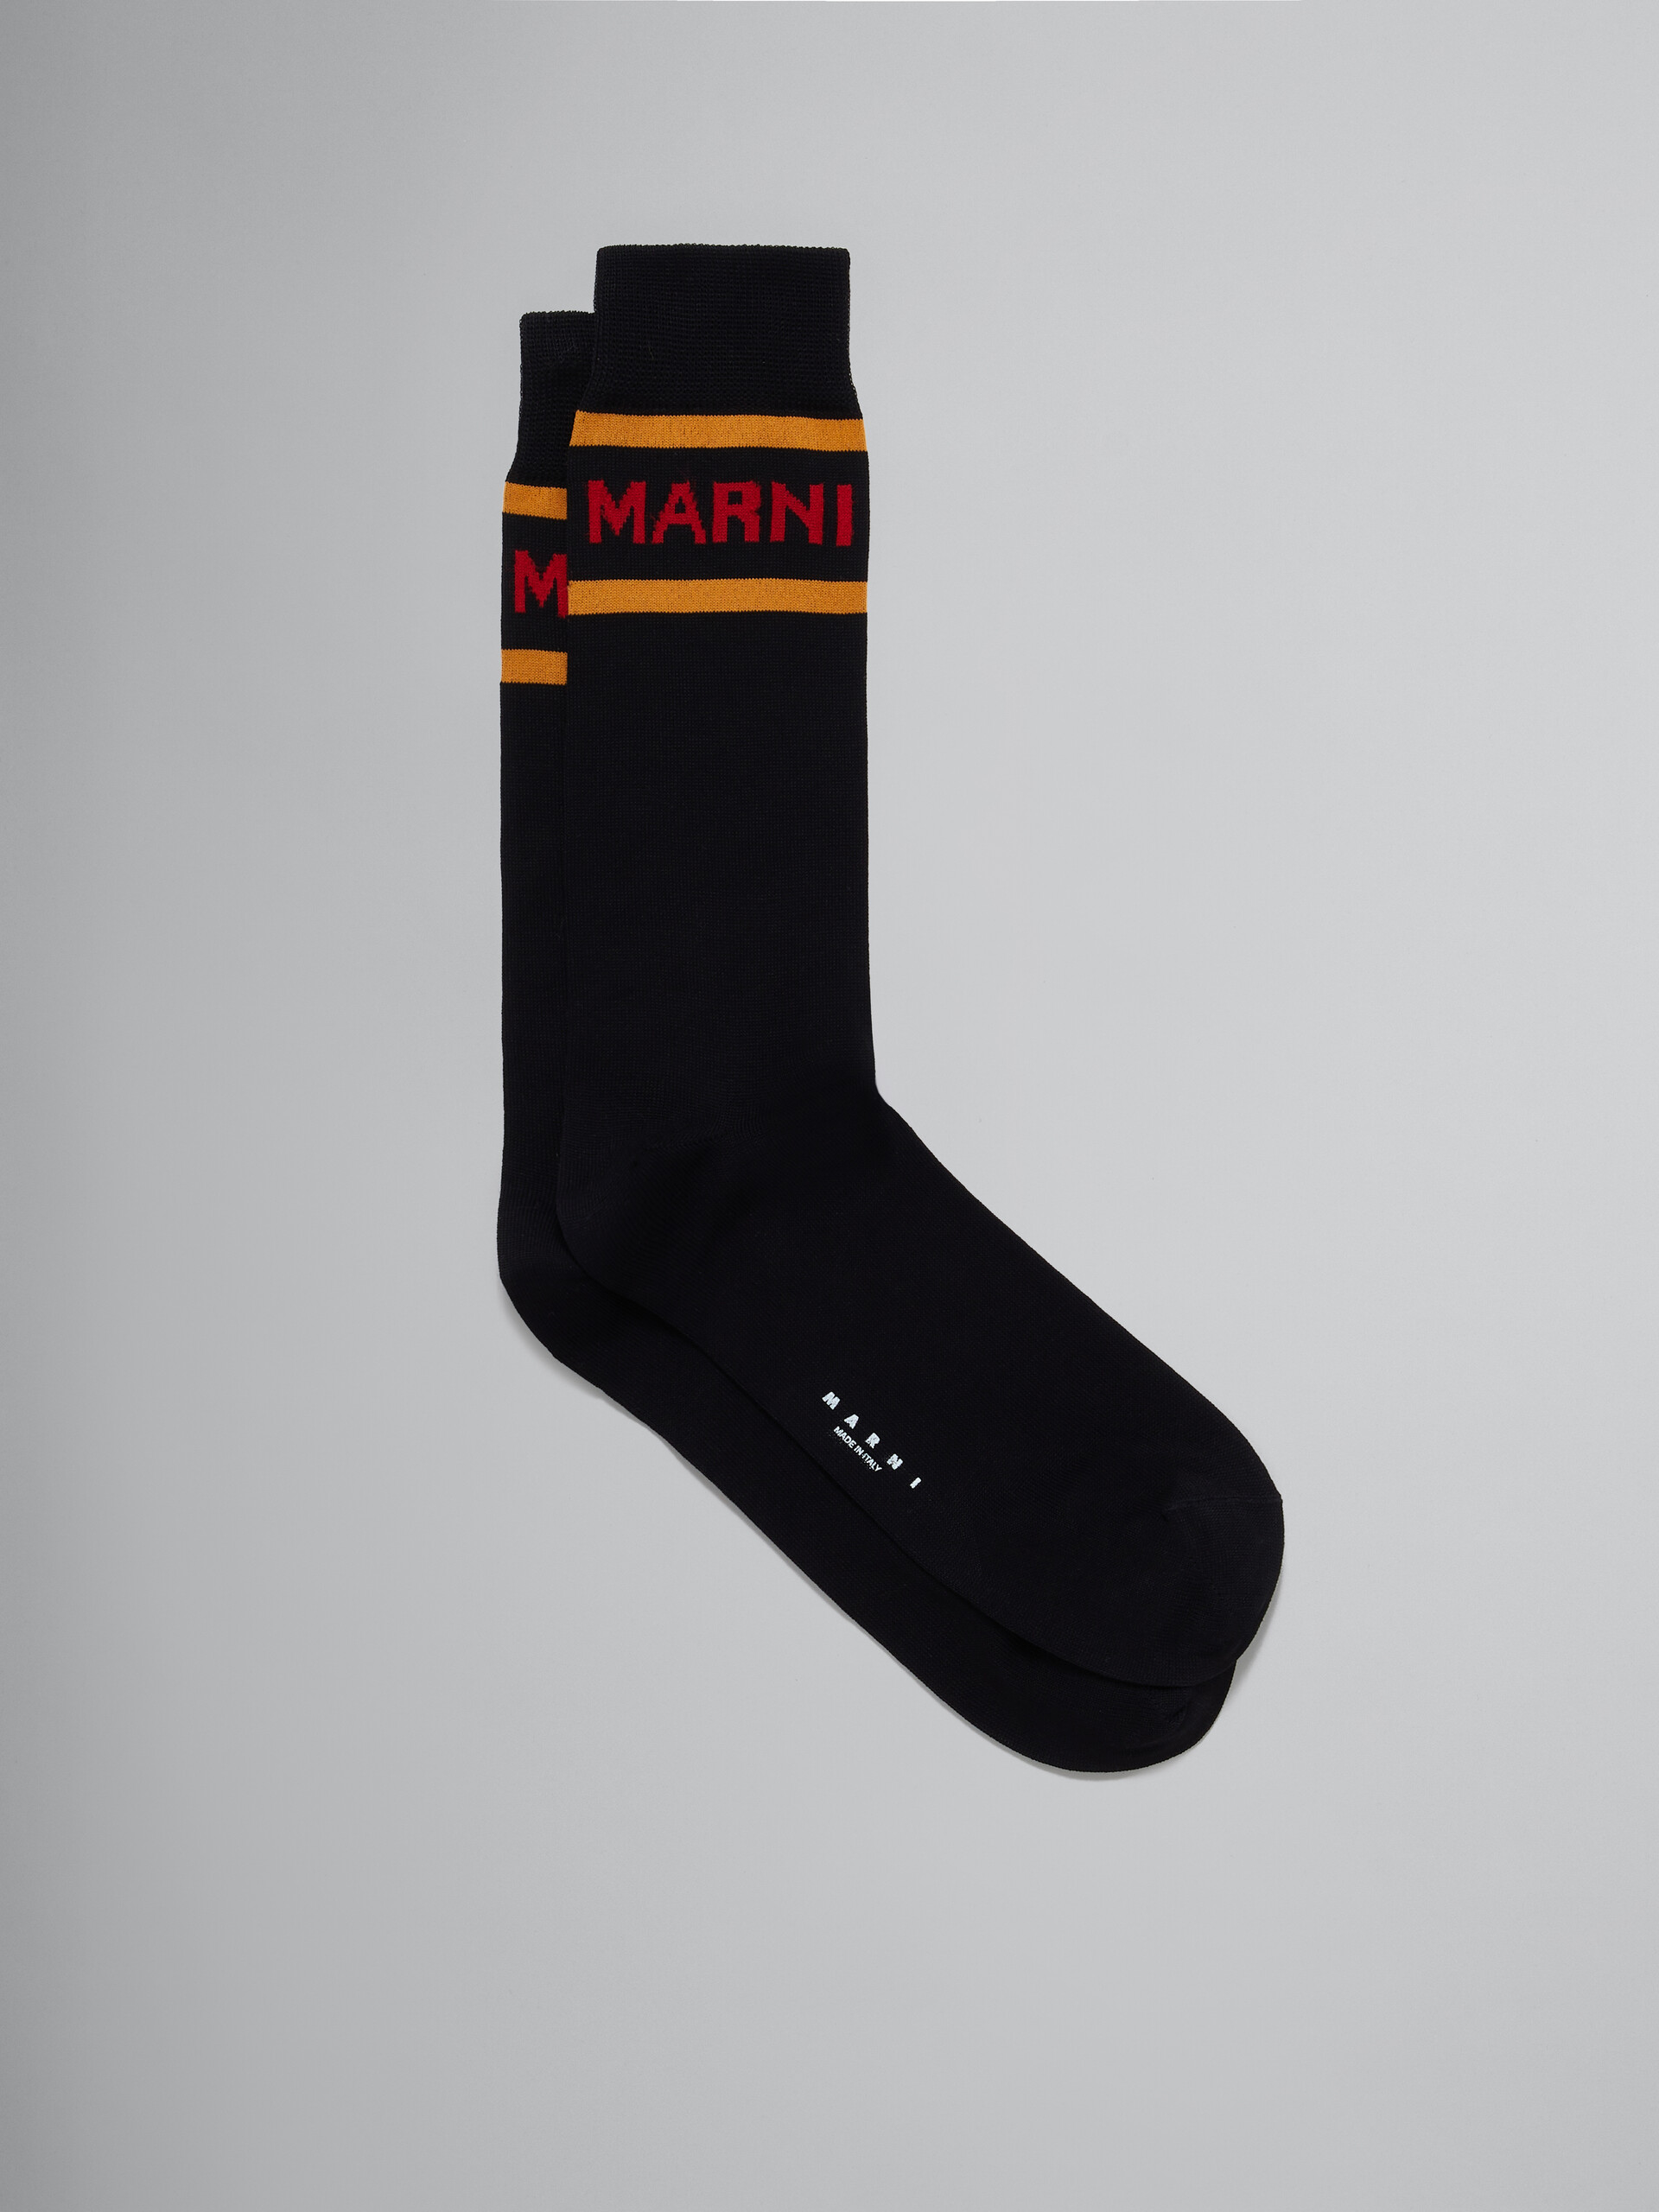 Black socks with logo cuffs - Socks - Image 1